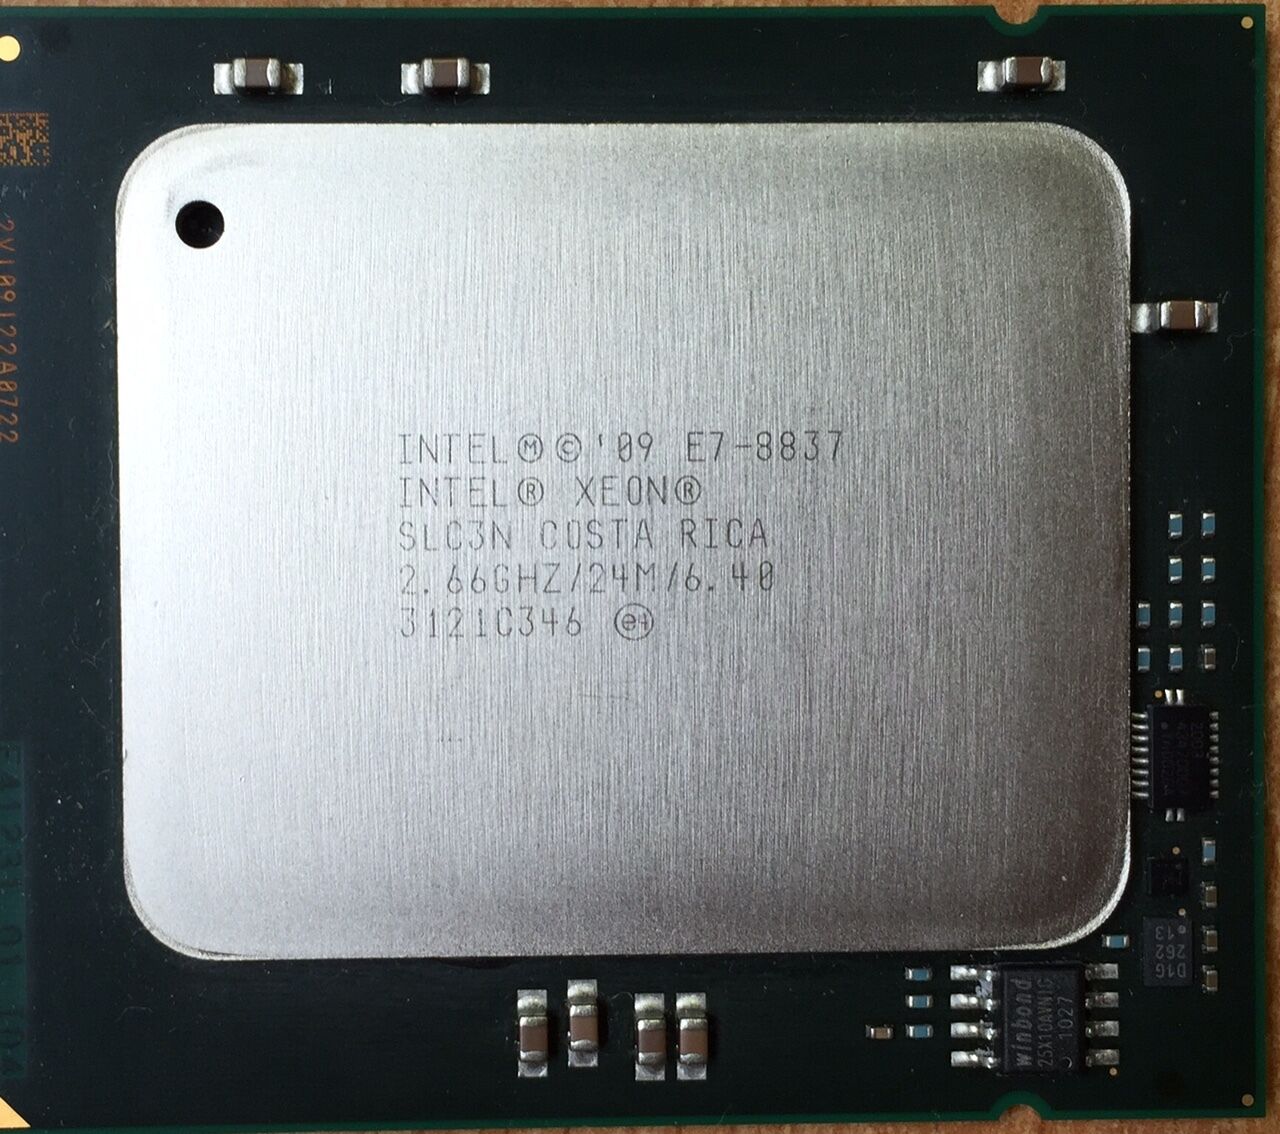 (A pedido) CPU Intel Xeon  E7-8837 2.67 GHz Eight Core SLC3N 8 cores 16 cores total Server CPU Processor